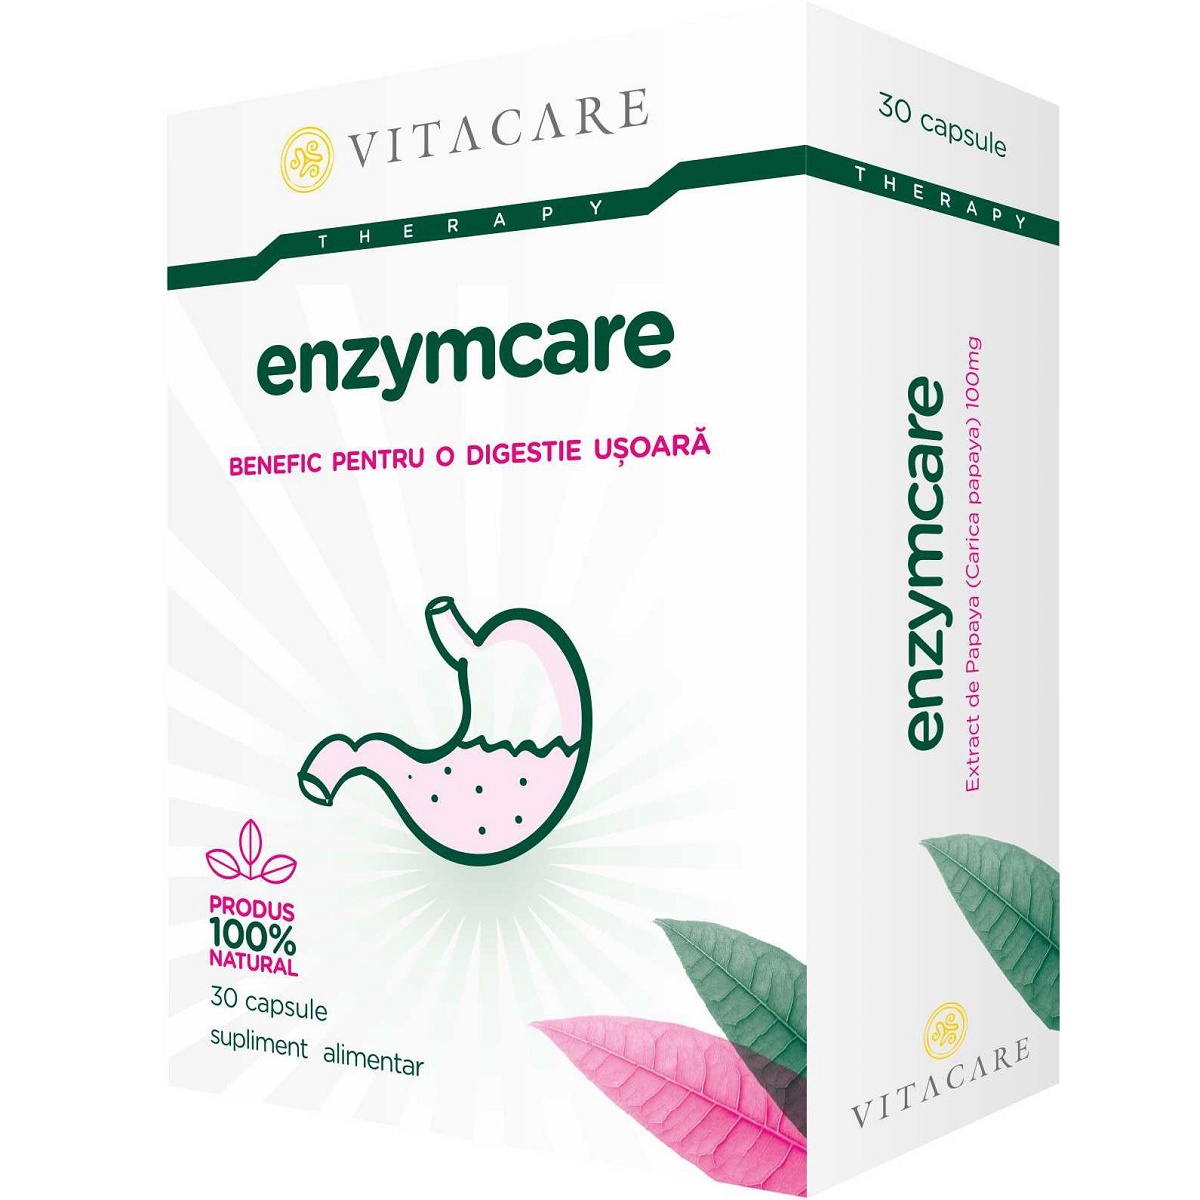 Enzime digestive - Enzymcare, 30 capsule, Vitacare, sinapis.ro